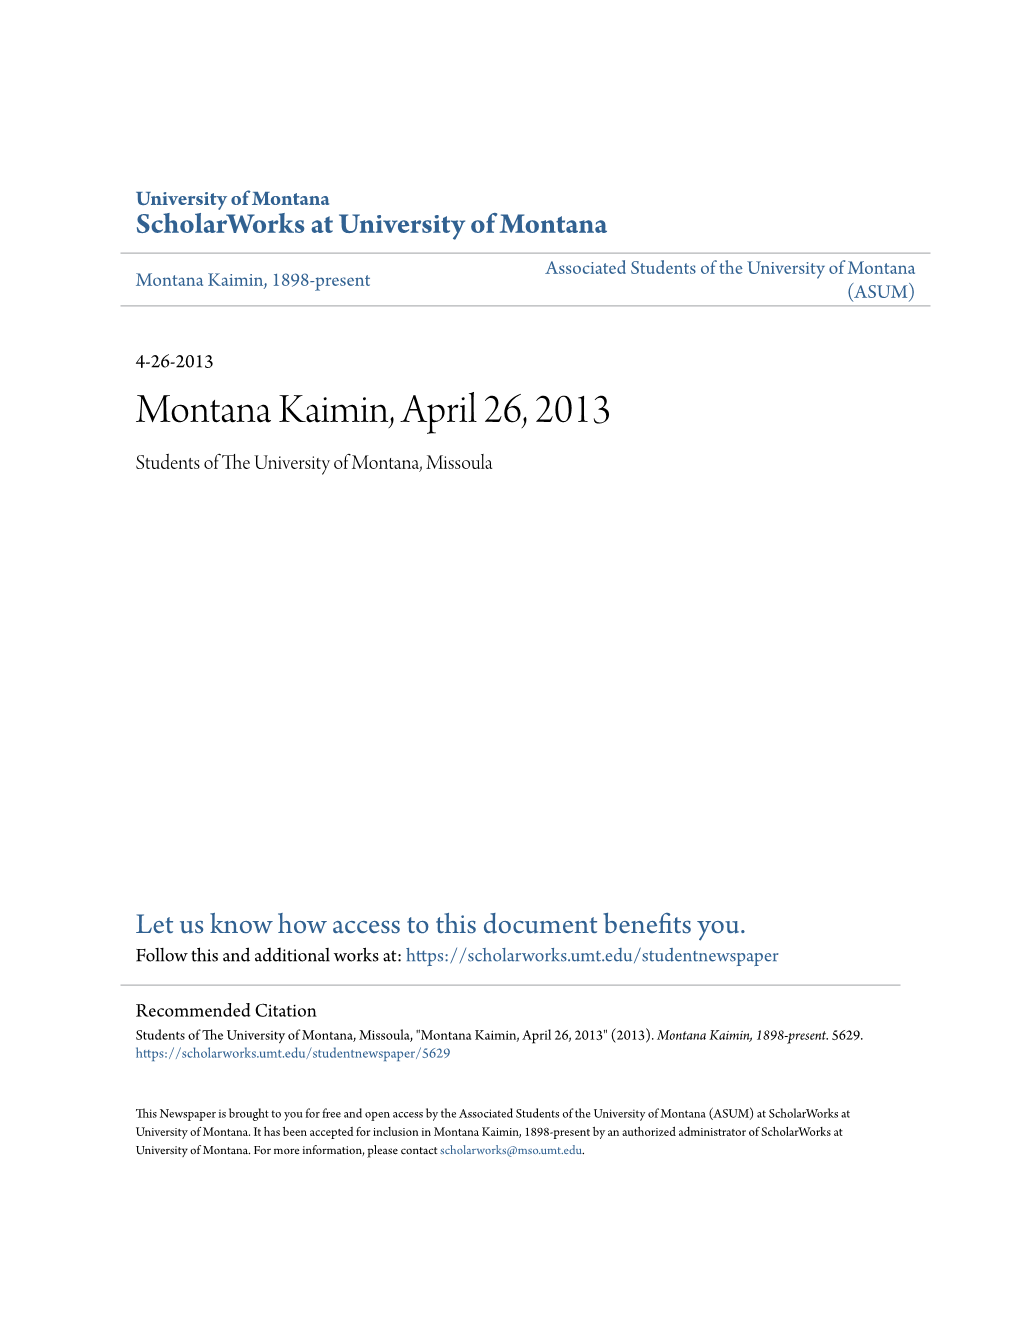 Montana Kaimin, April 26, 2013 Students of the Niu Versity of Montana, Missoula